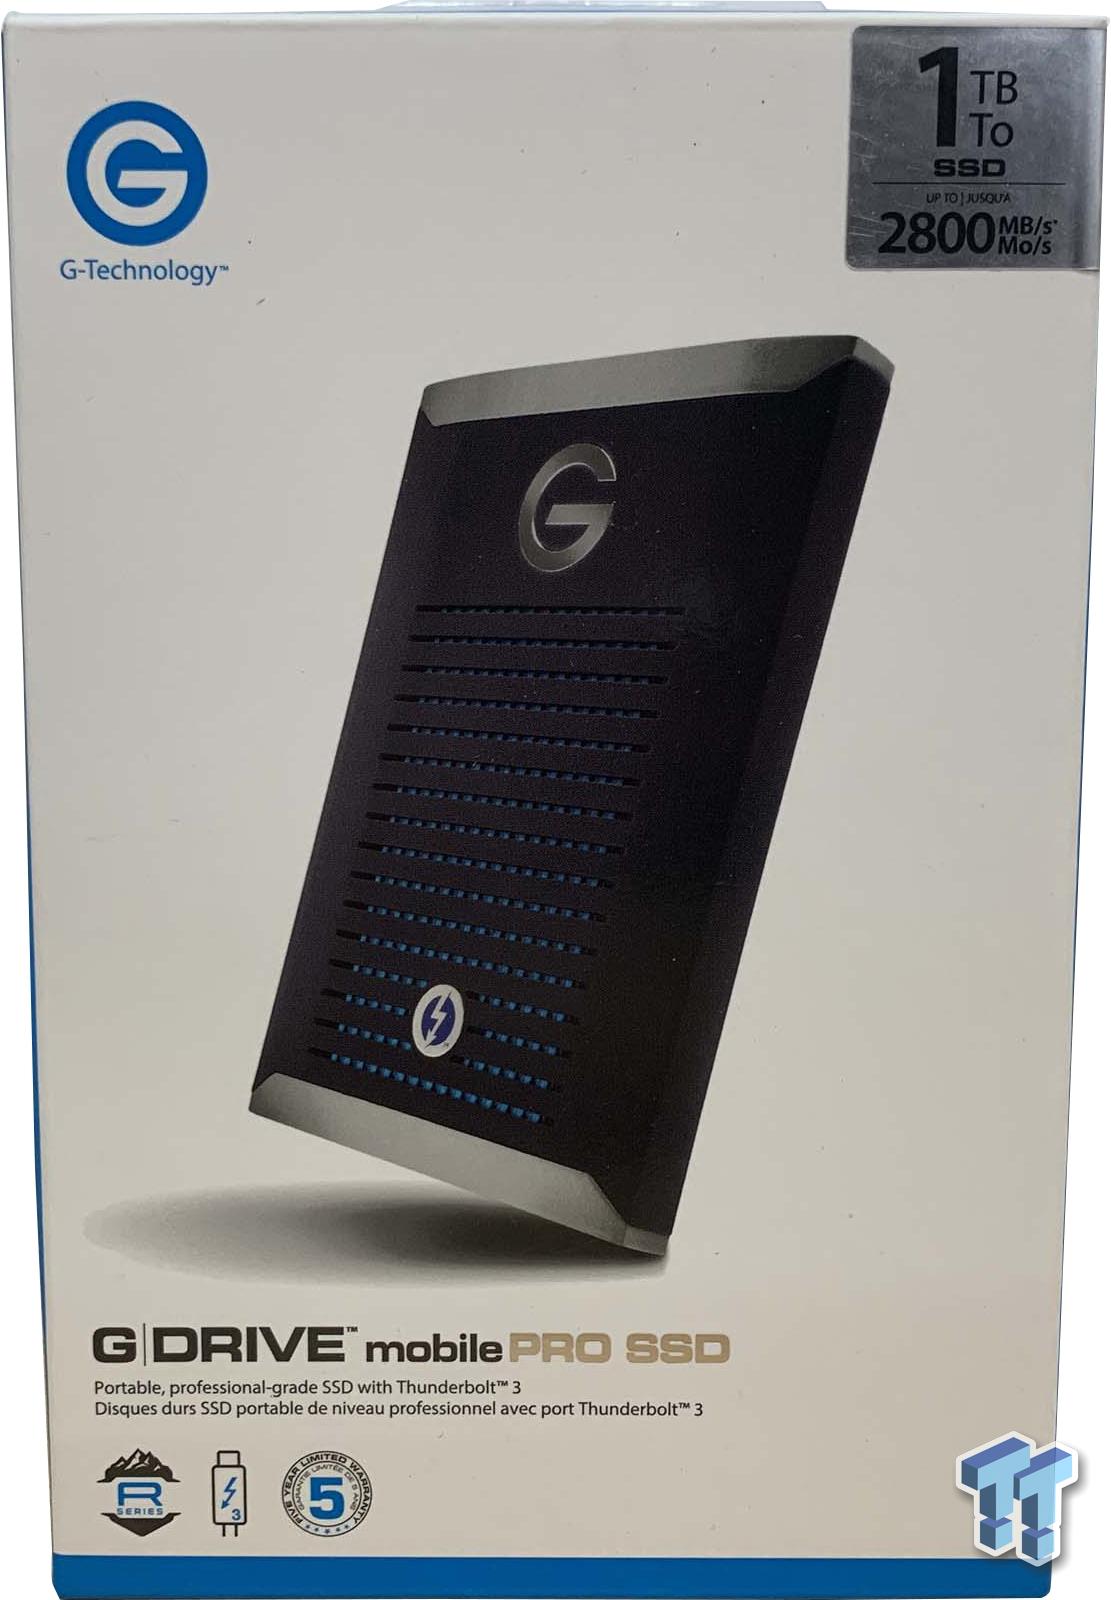 G Drive Mobile Pro Ssd 1tb Review Tweaktown